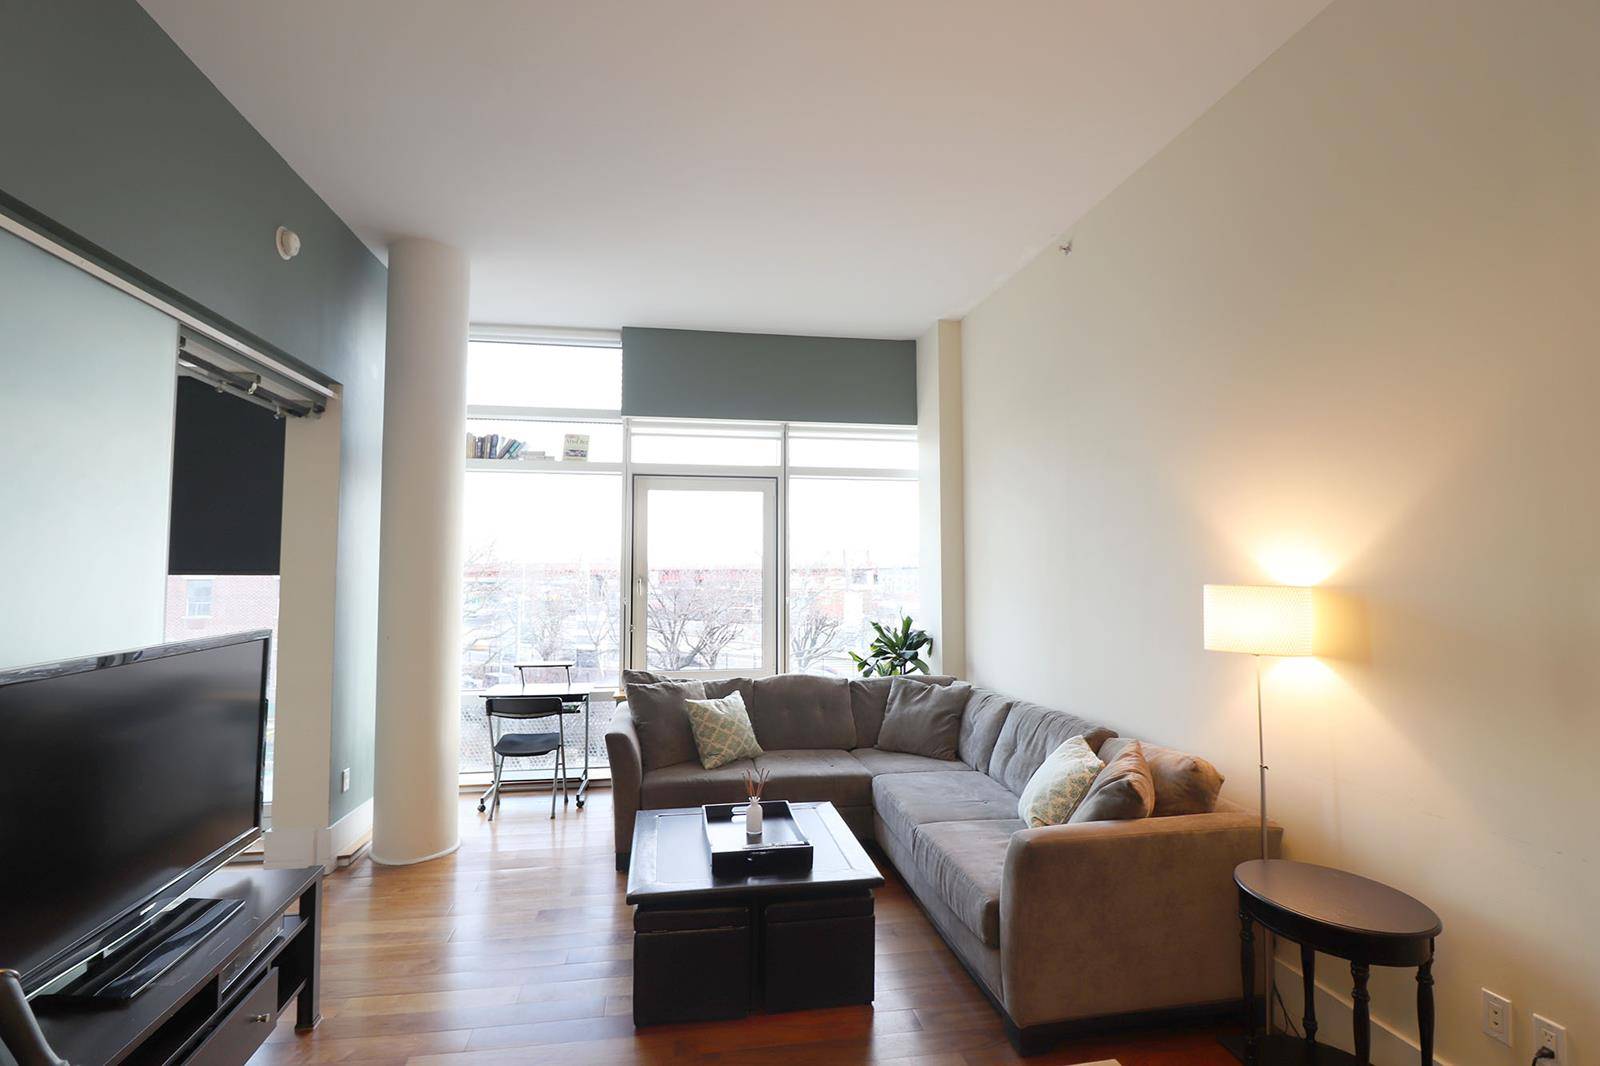 The apartment offers Lofty 11 2 foot ceilings, solid American walnut flooring, triple pane laminated windows.